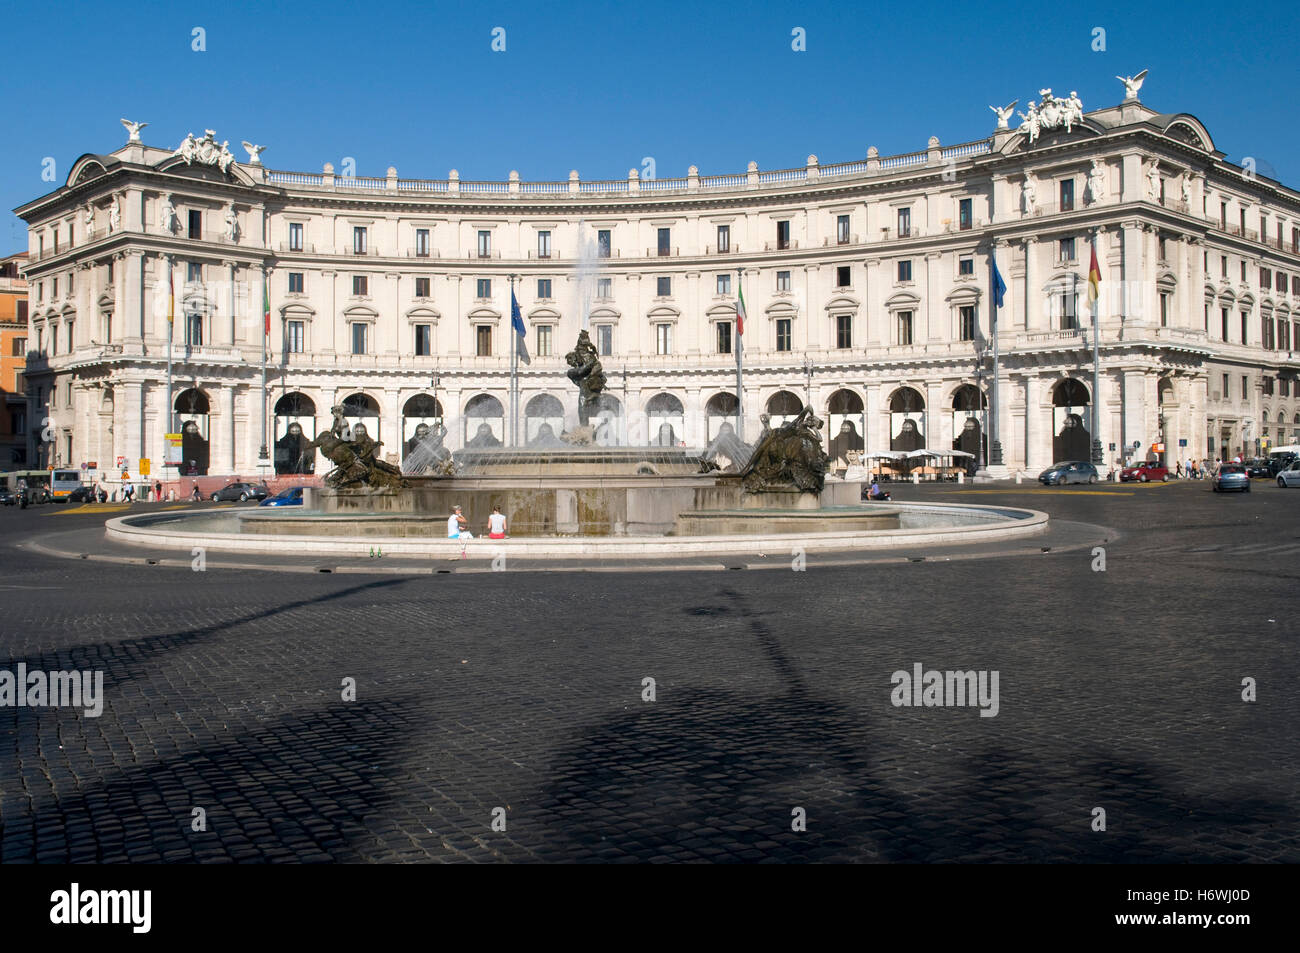 La fontaine des Naïades sur la Piazza della Repubblica square, Rome, Italie, Europe Banque D'Images